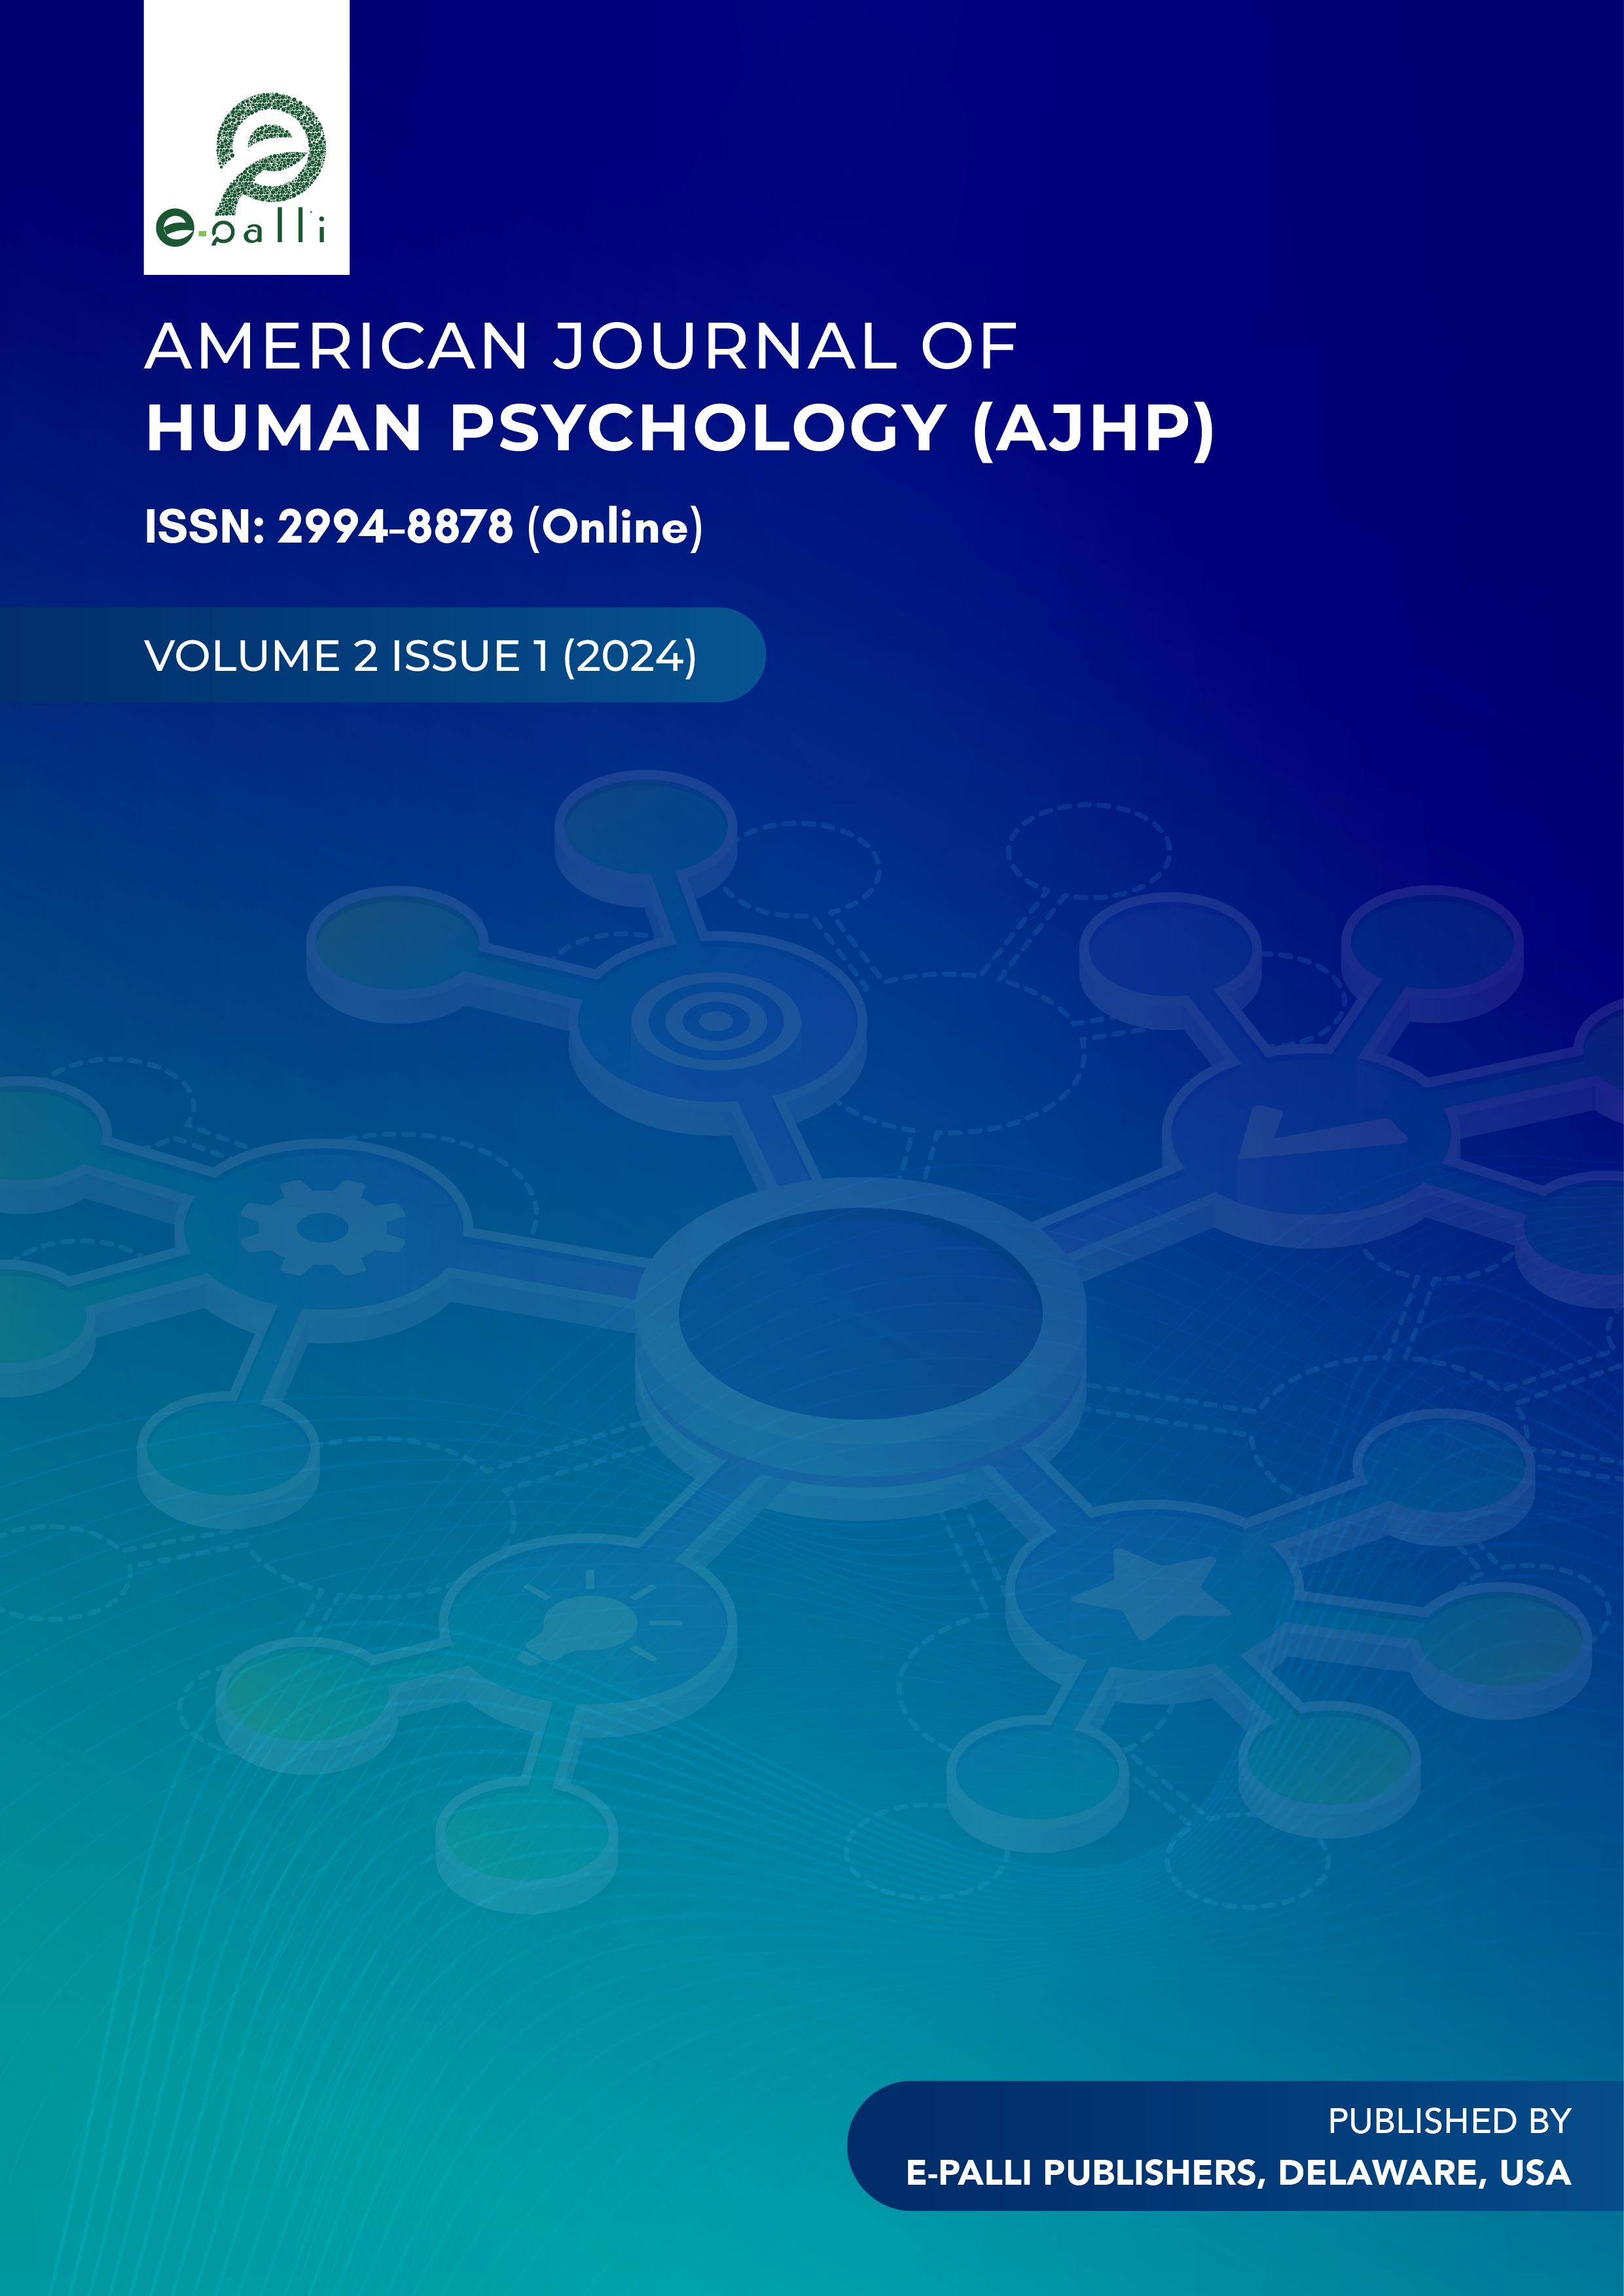                     View Vol. 2 No. 1 (2024): American Journal of Human Psychology
                